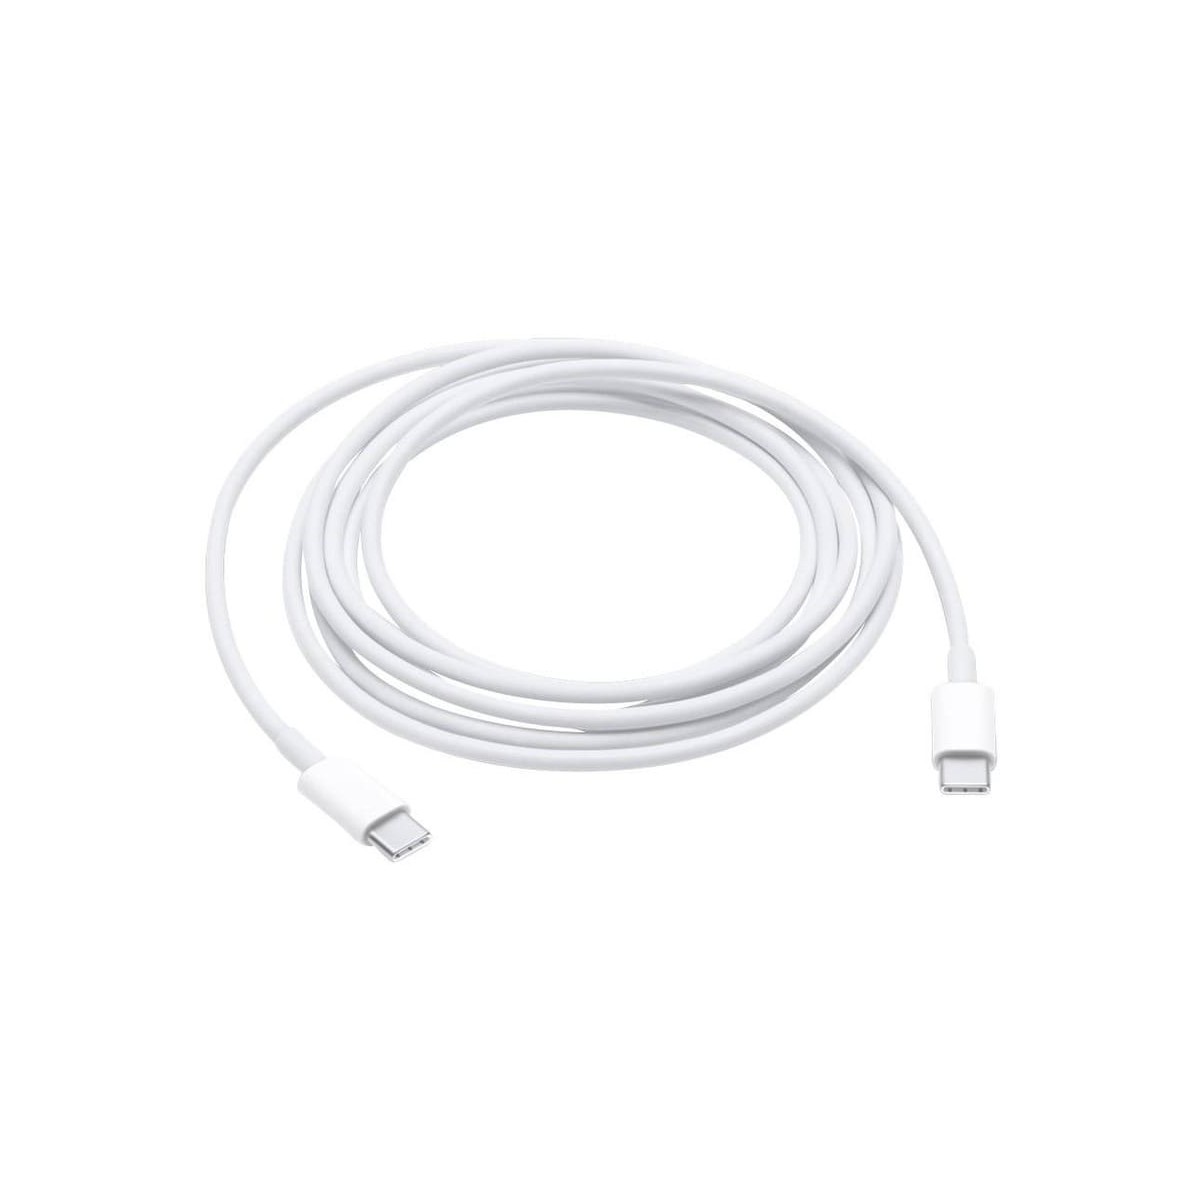 Apple Cable De Carga Usb-C A Usb-C De 2 Metros Blanco